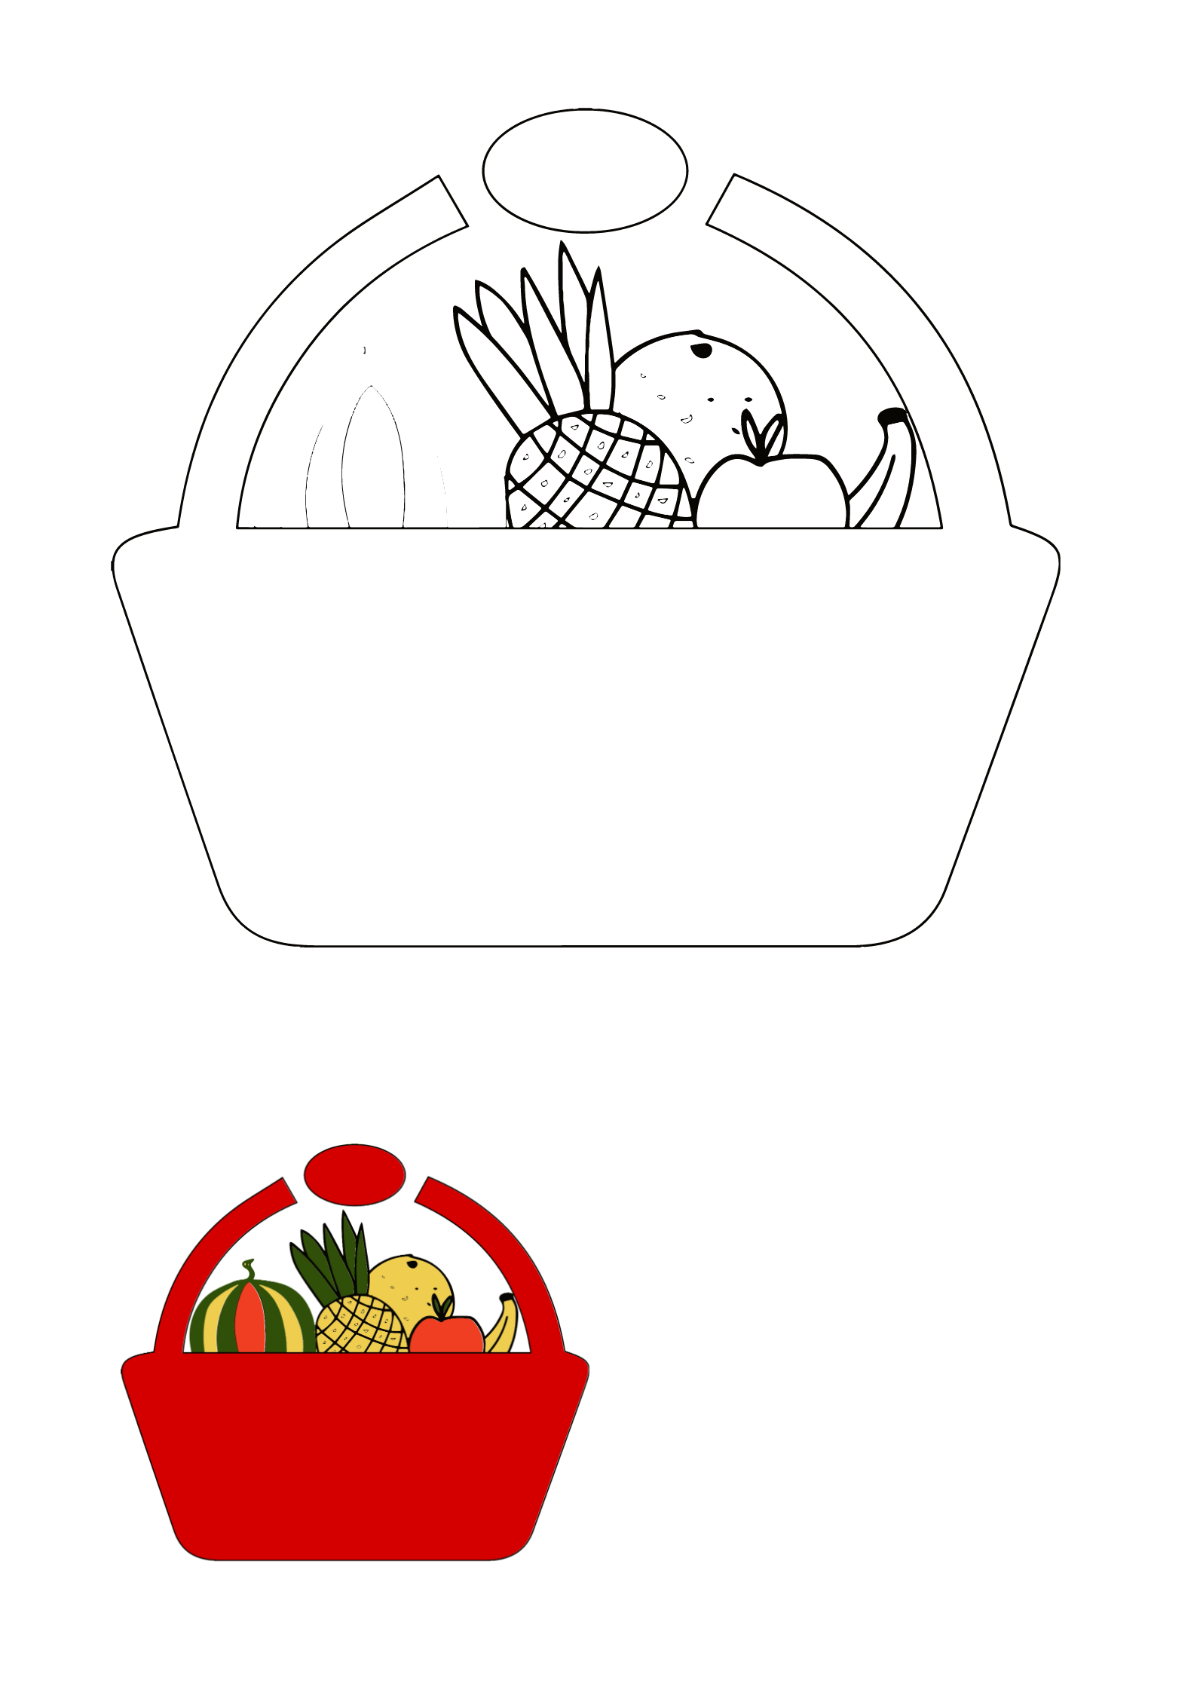 Fruit Basket Craft - The Joy of Sharing